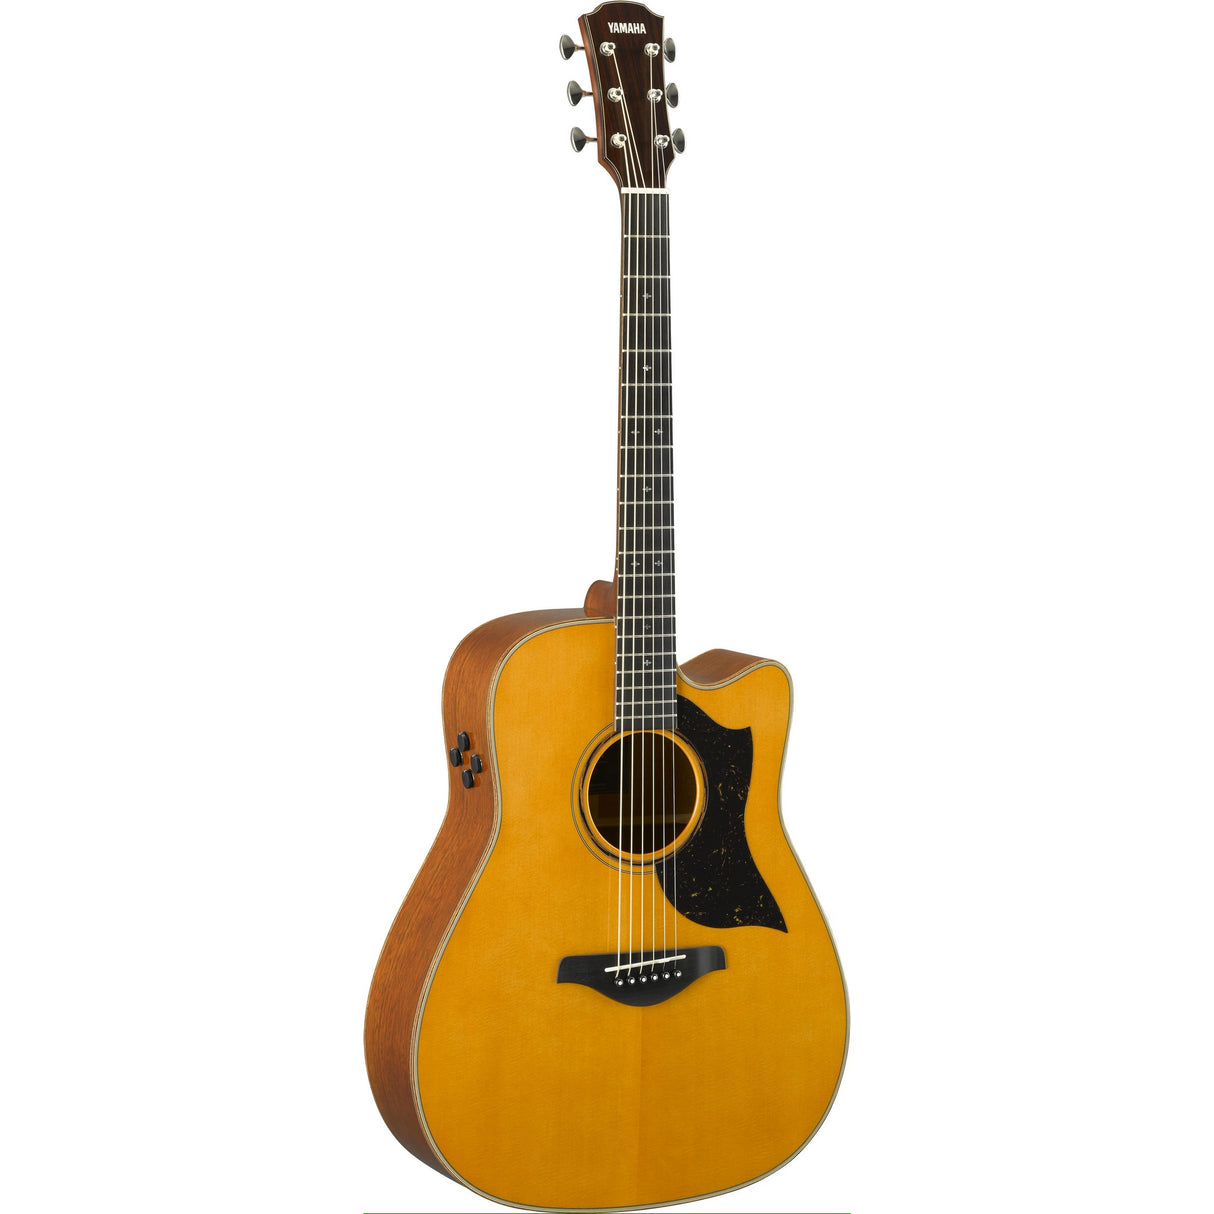 Yamaha A5M Traditional Western Body Solid Mahogany Cutaway Acoustic Guitar, Vintage Natural